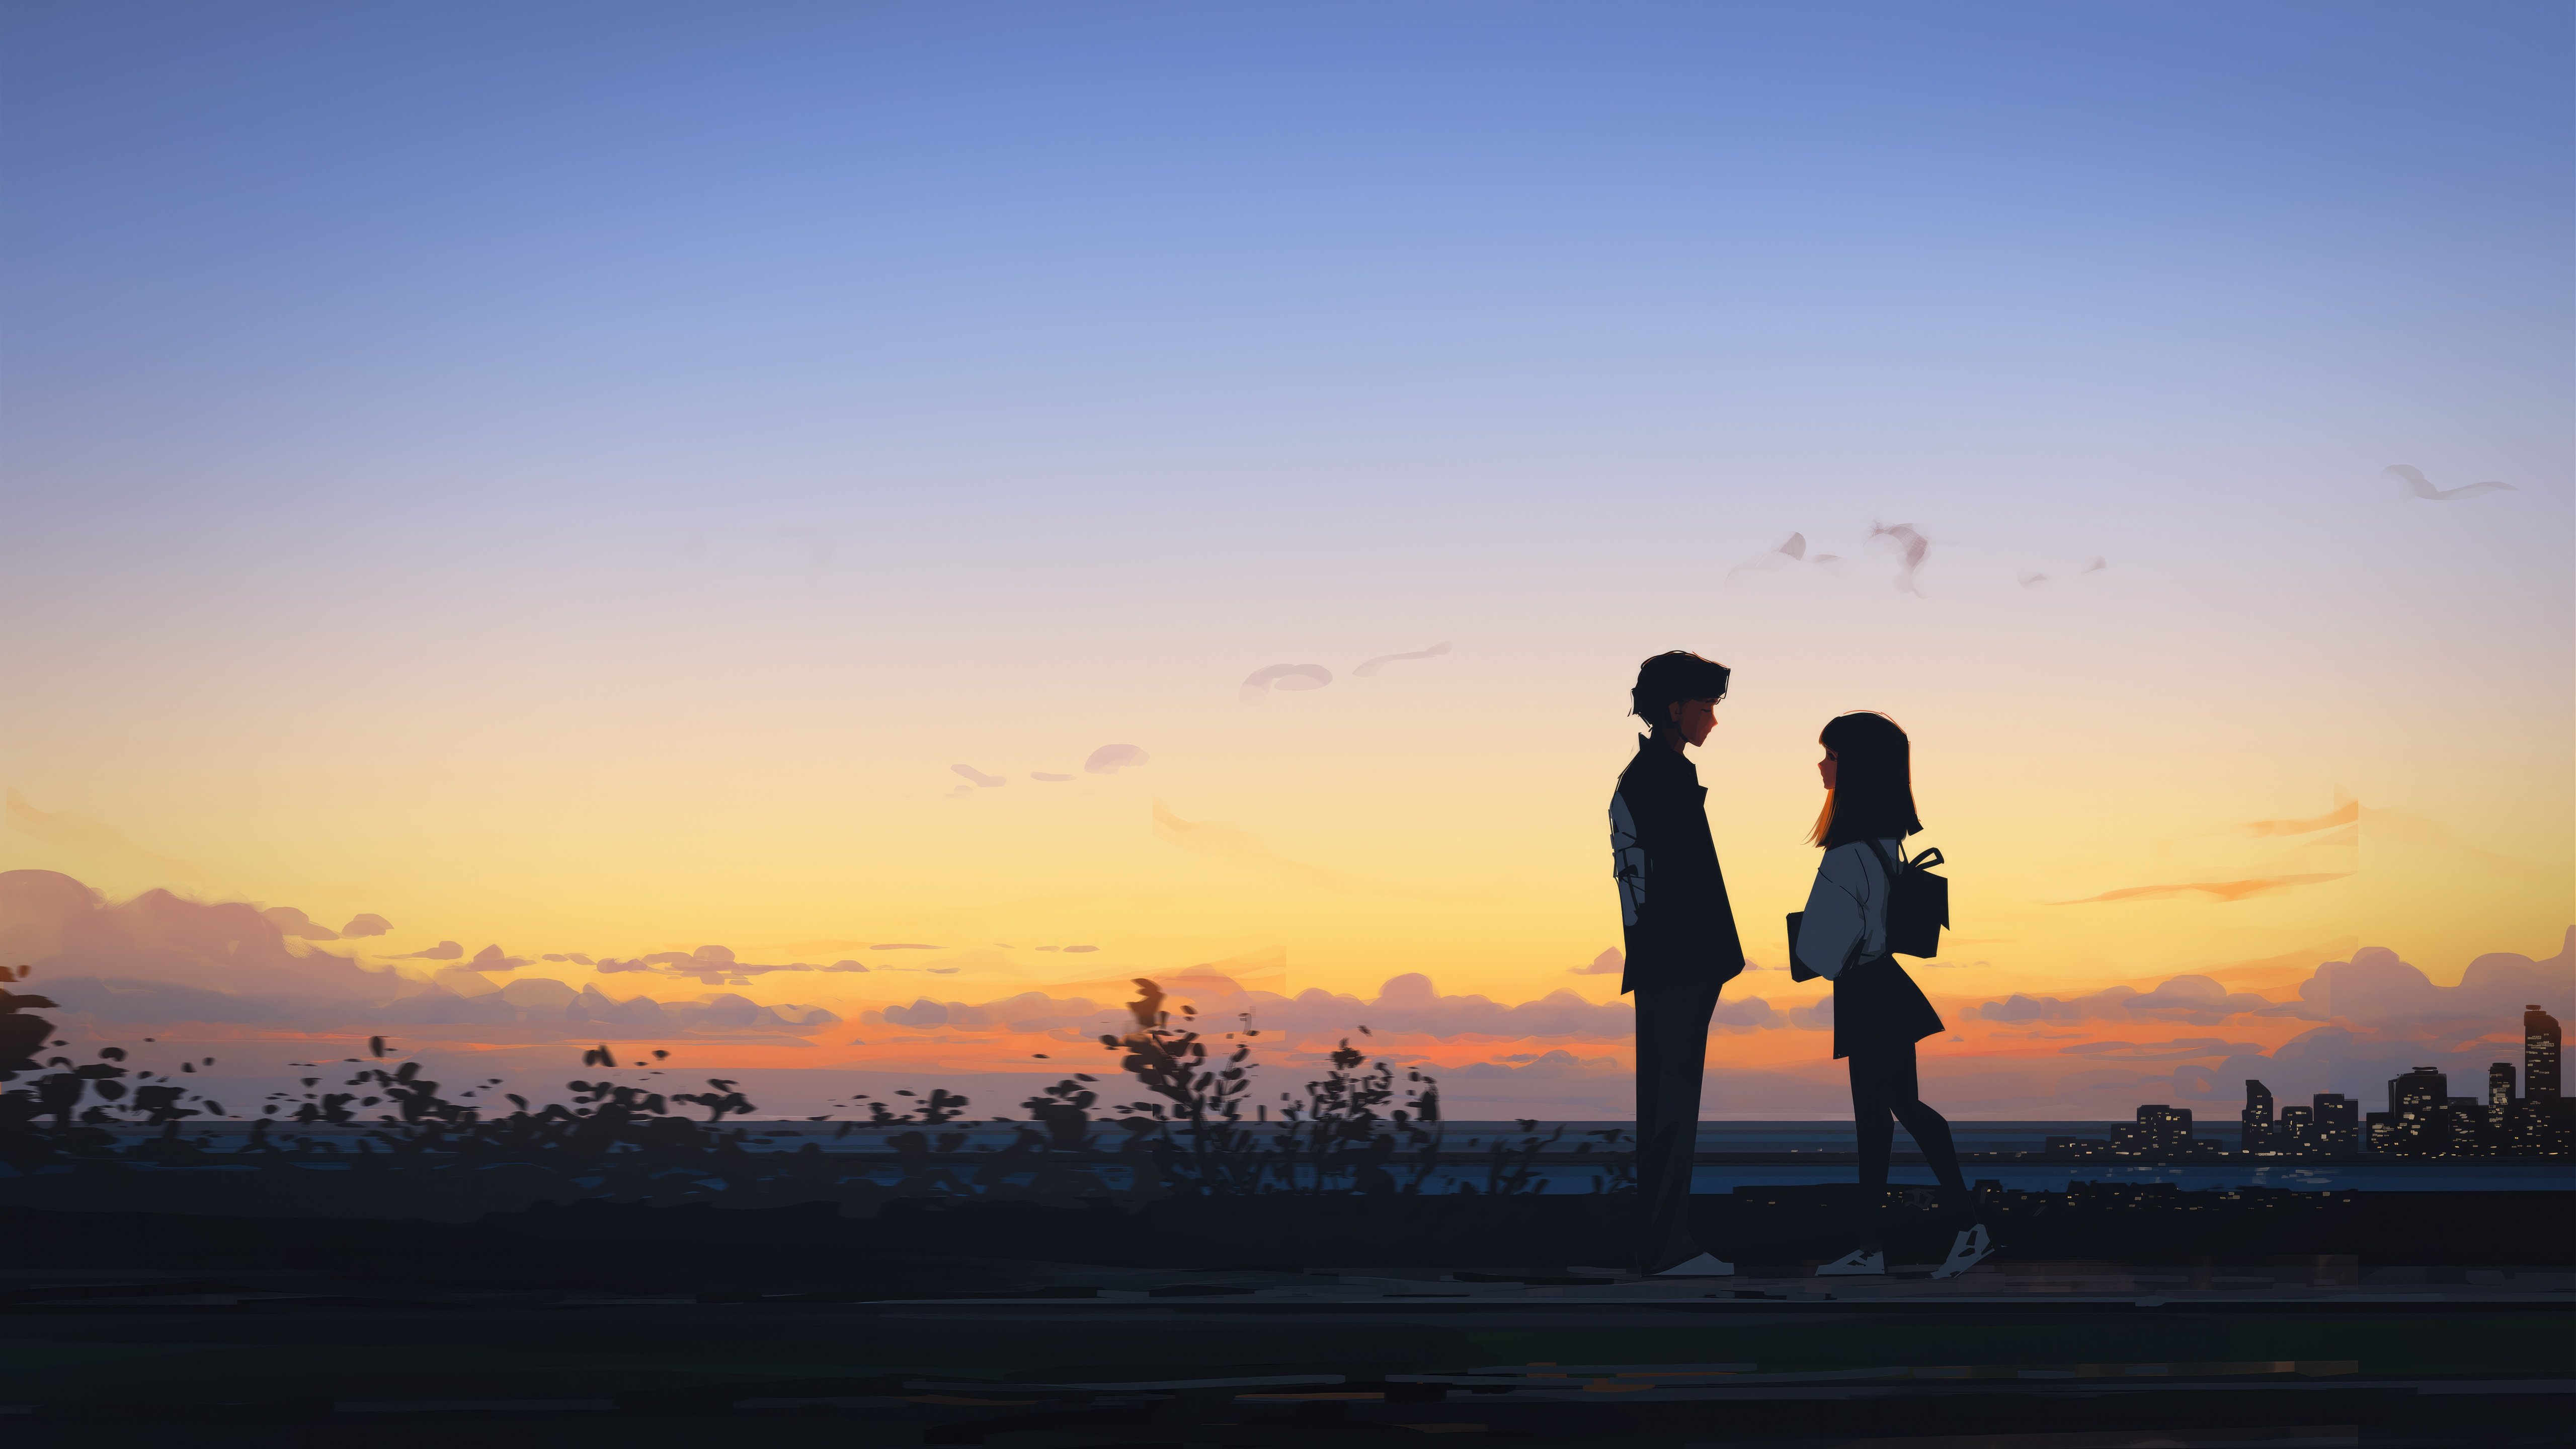 Fondos de pantalla Anime couple sunset landscape backlight